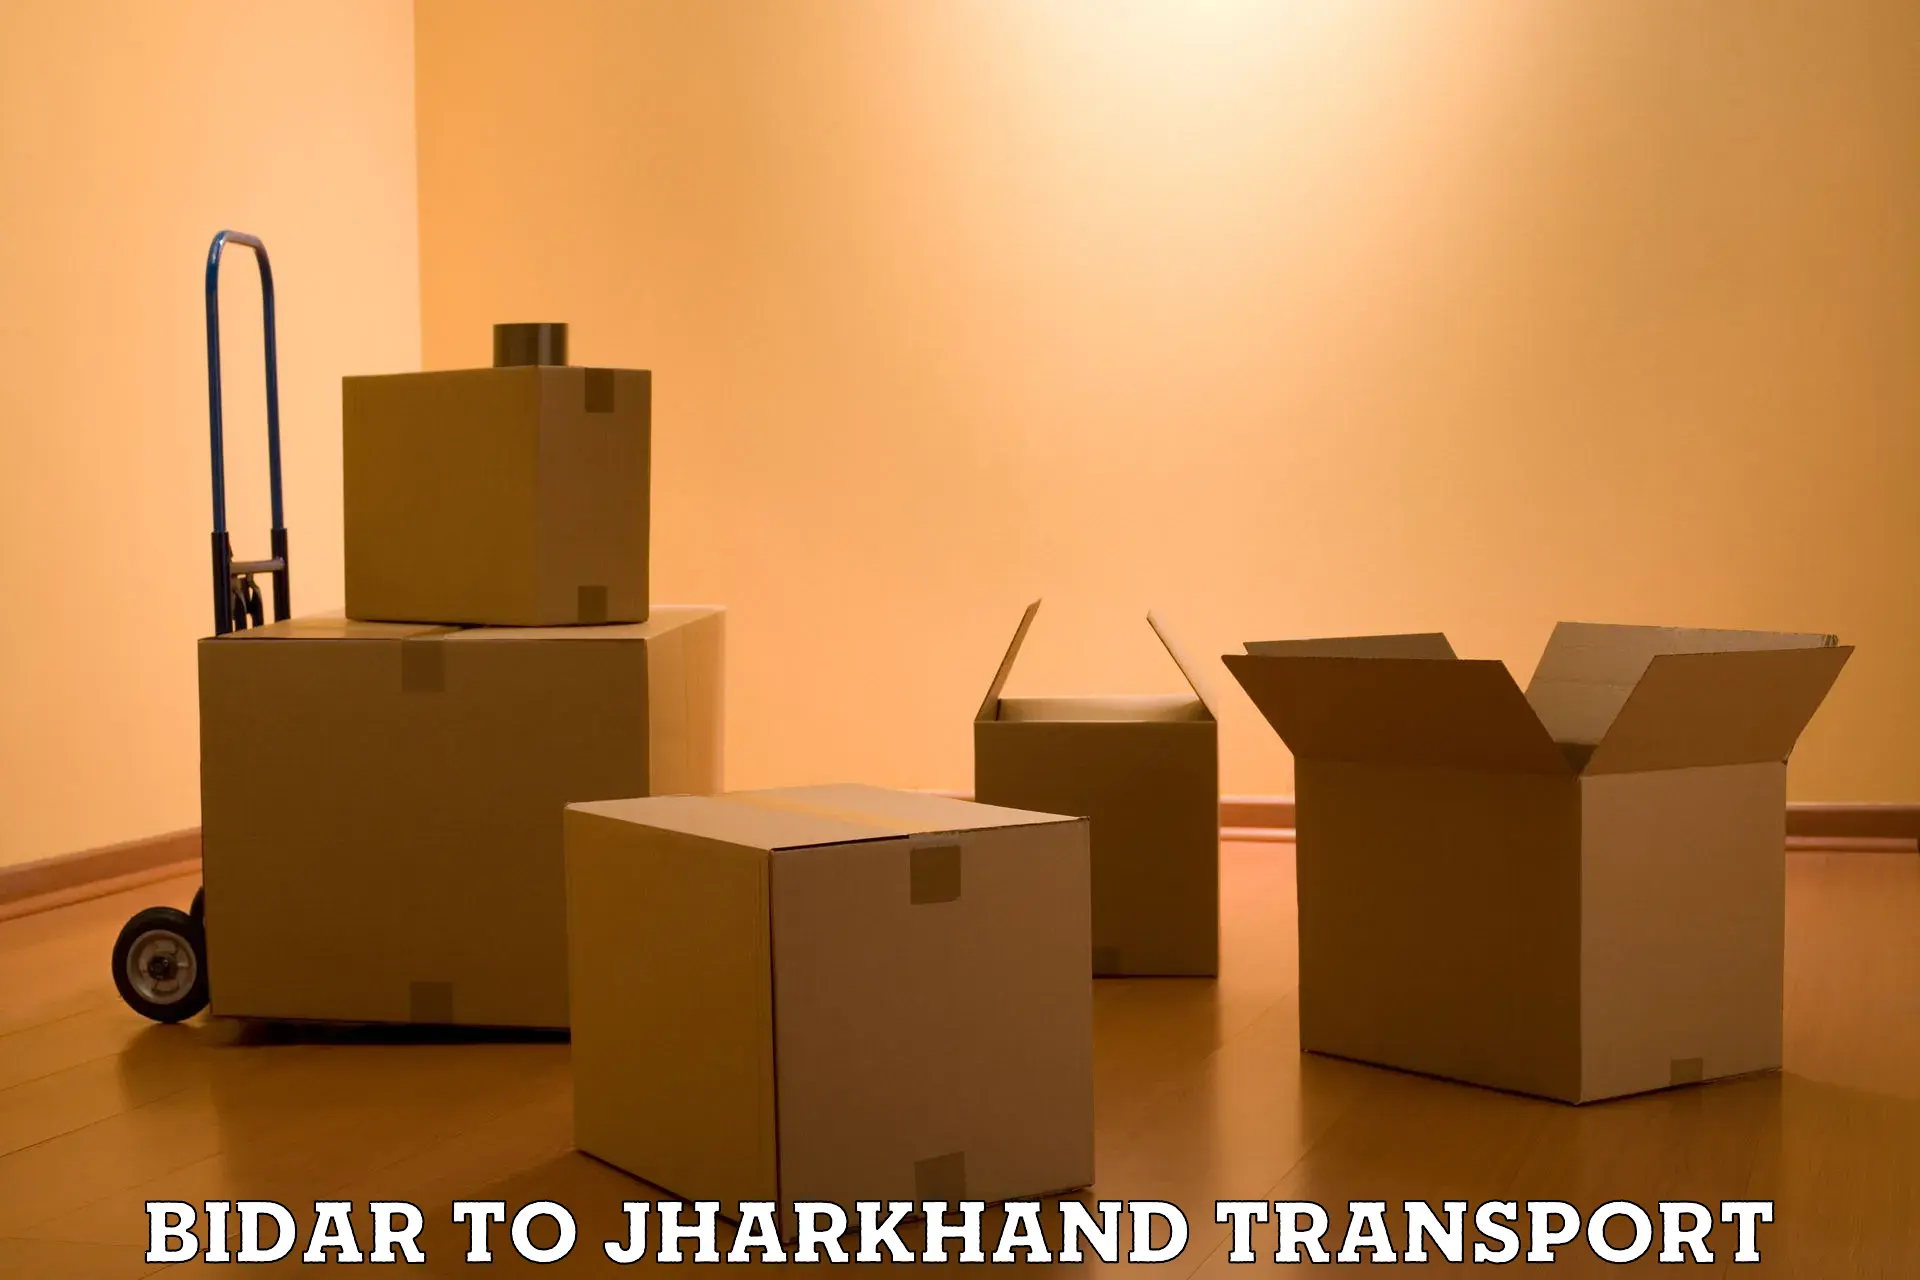 Daily parcel service transport Bidar to Dhanbad